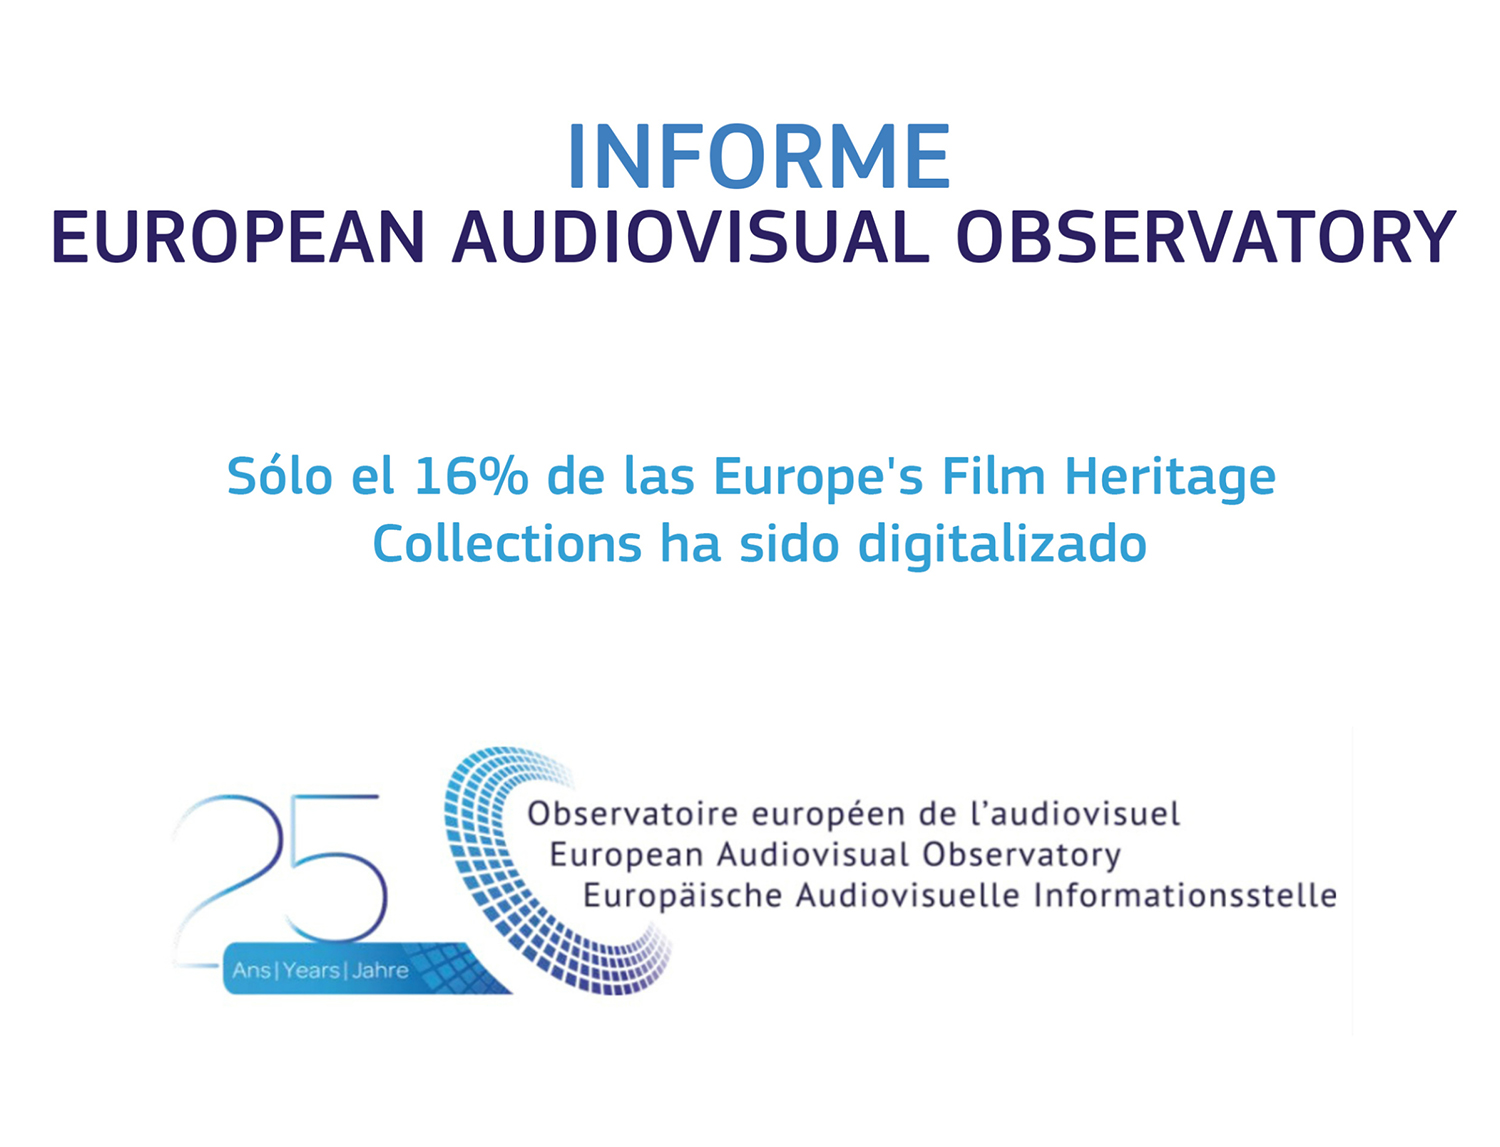 Observatorio Europeo del Audiovisual Informe Film Heritage 2017 Interior